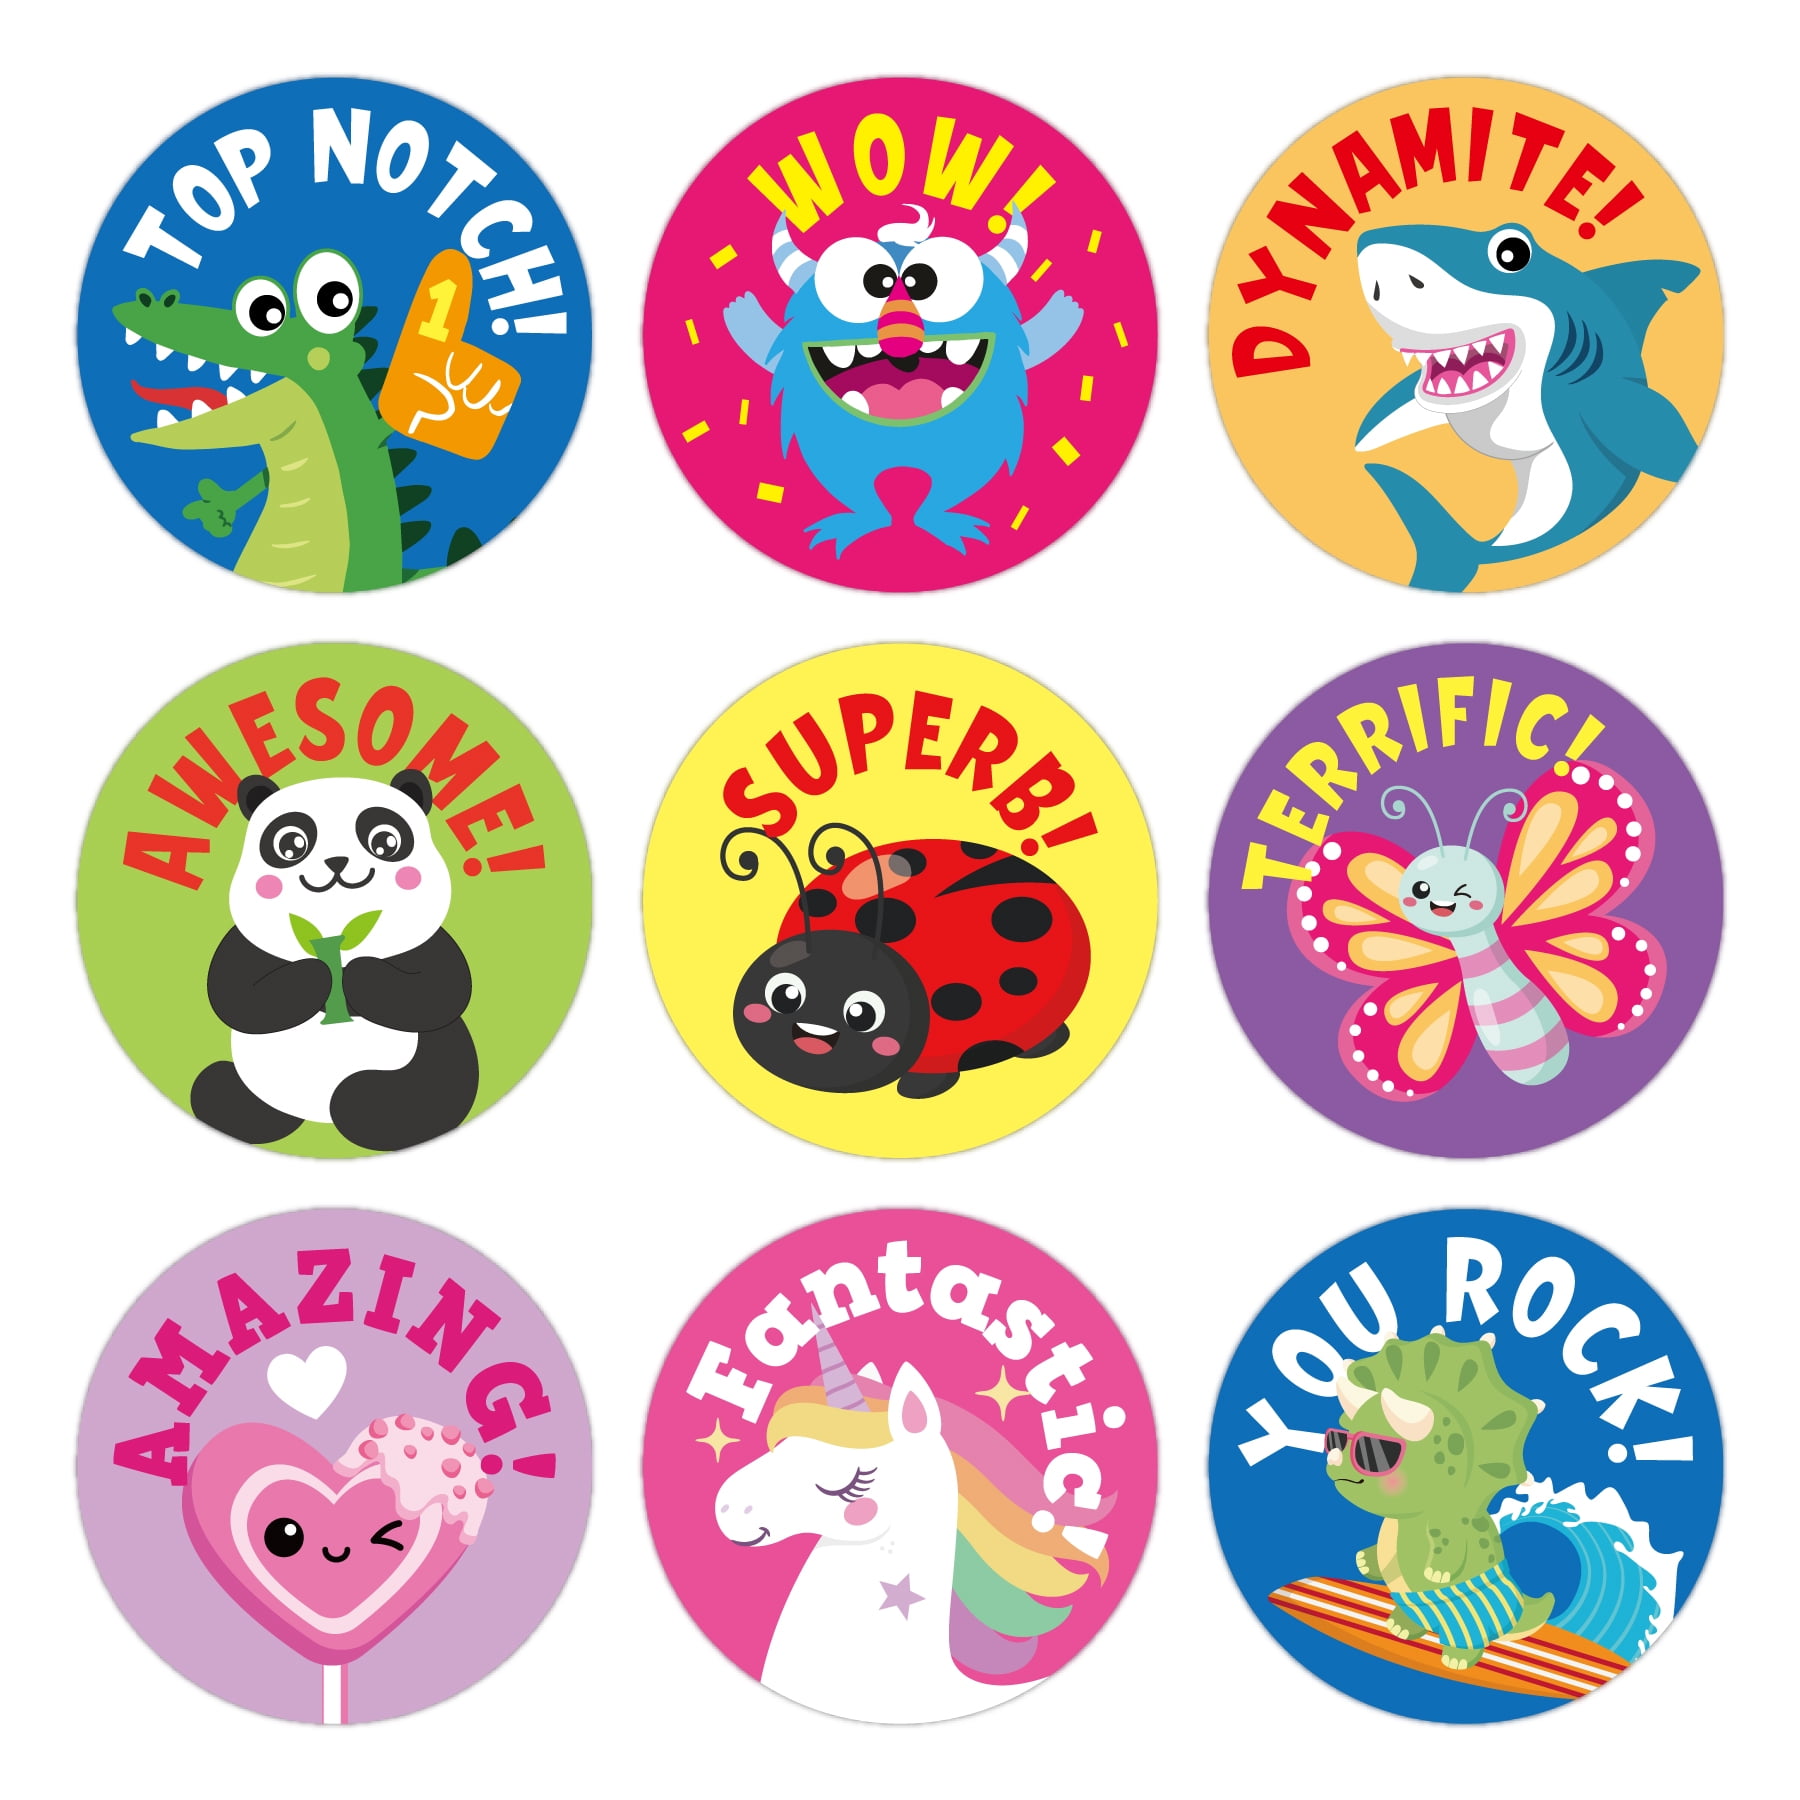 Kid's Reward Sticker/Badge - Good Job (Unicorn)' Small Buttons